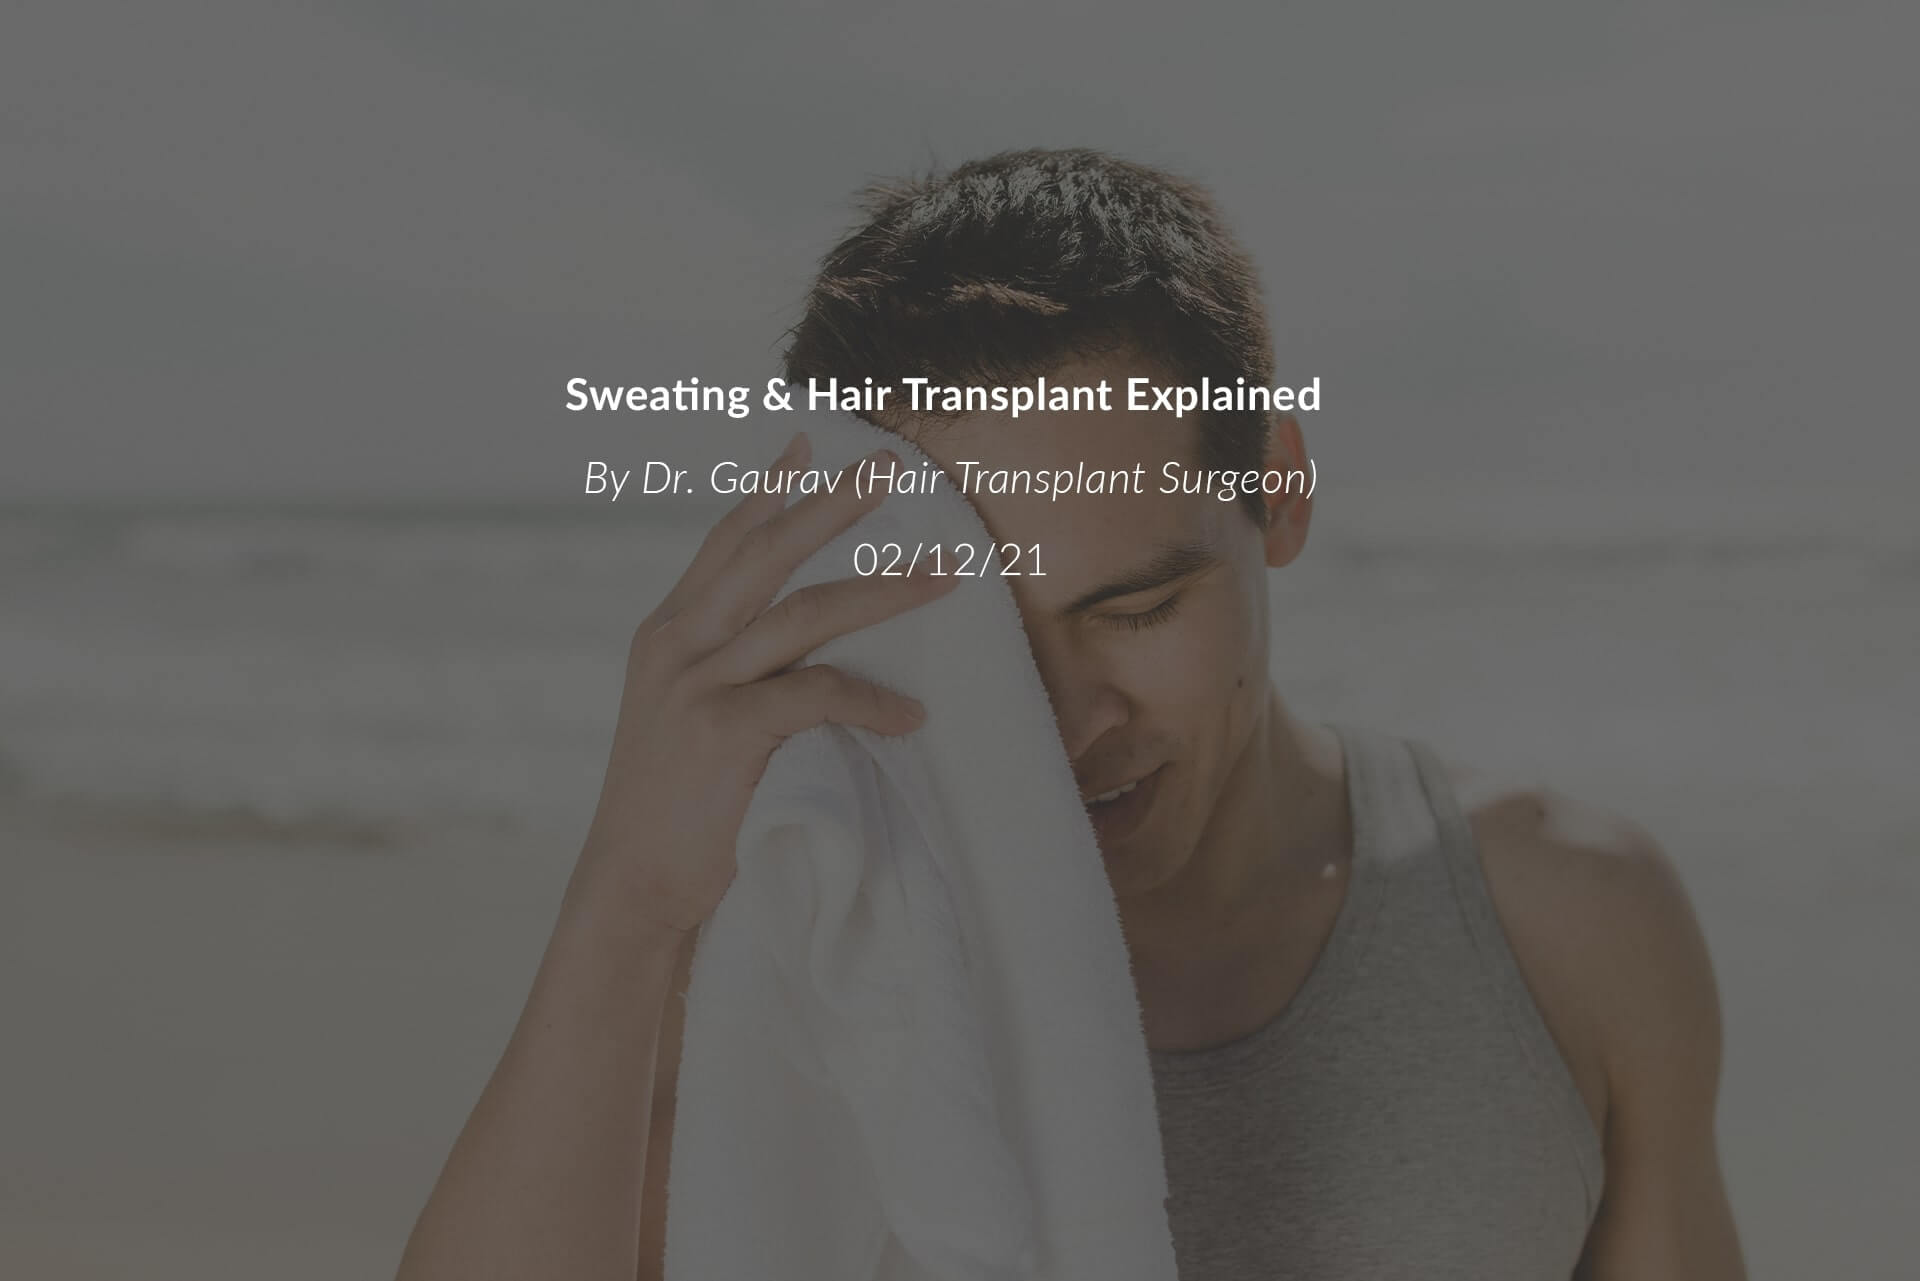 Sweating & Hair Transplant Explained